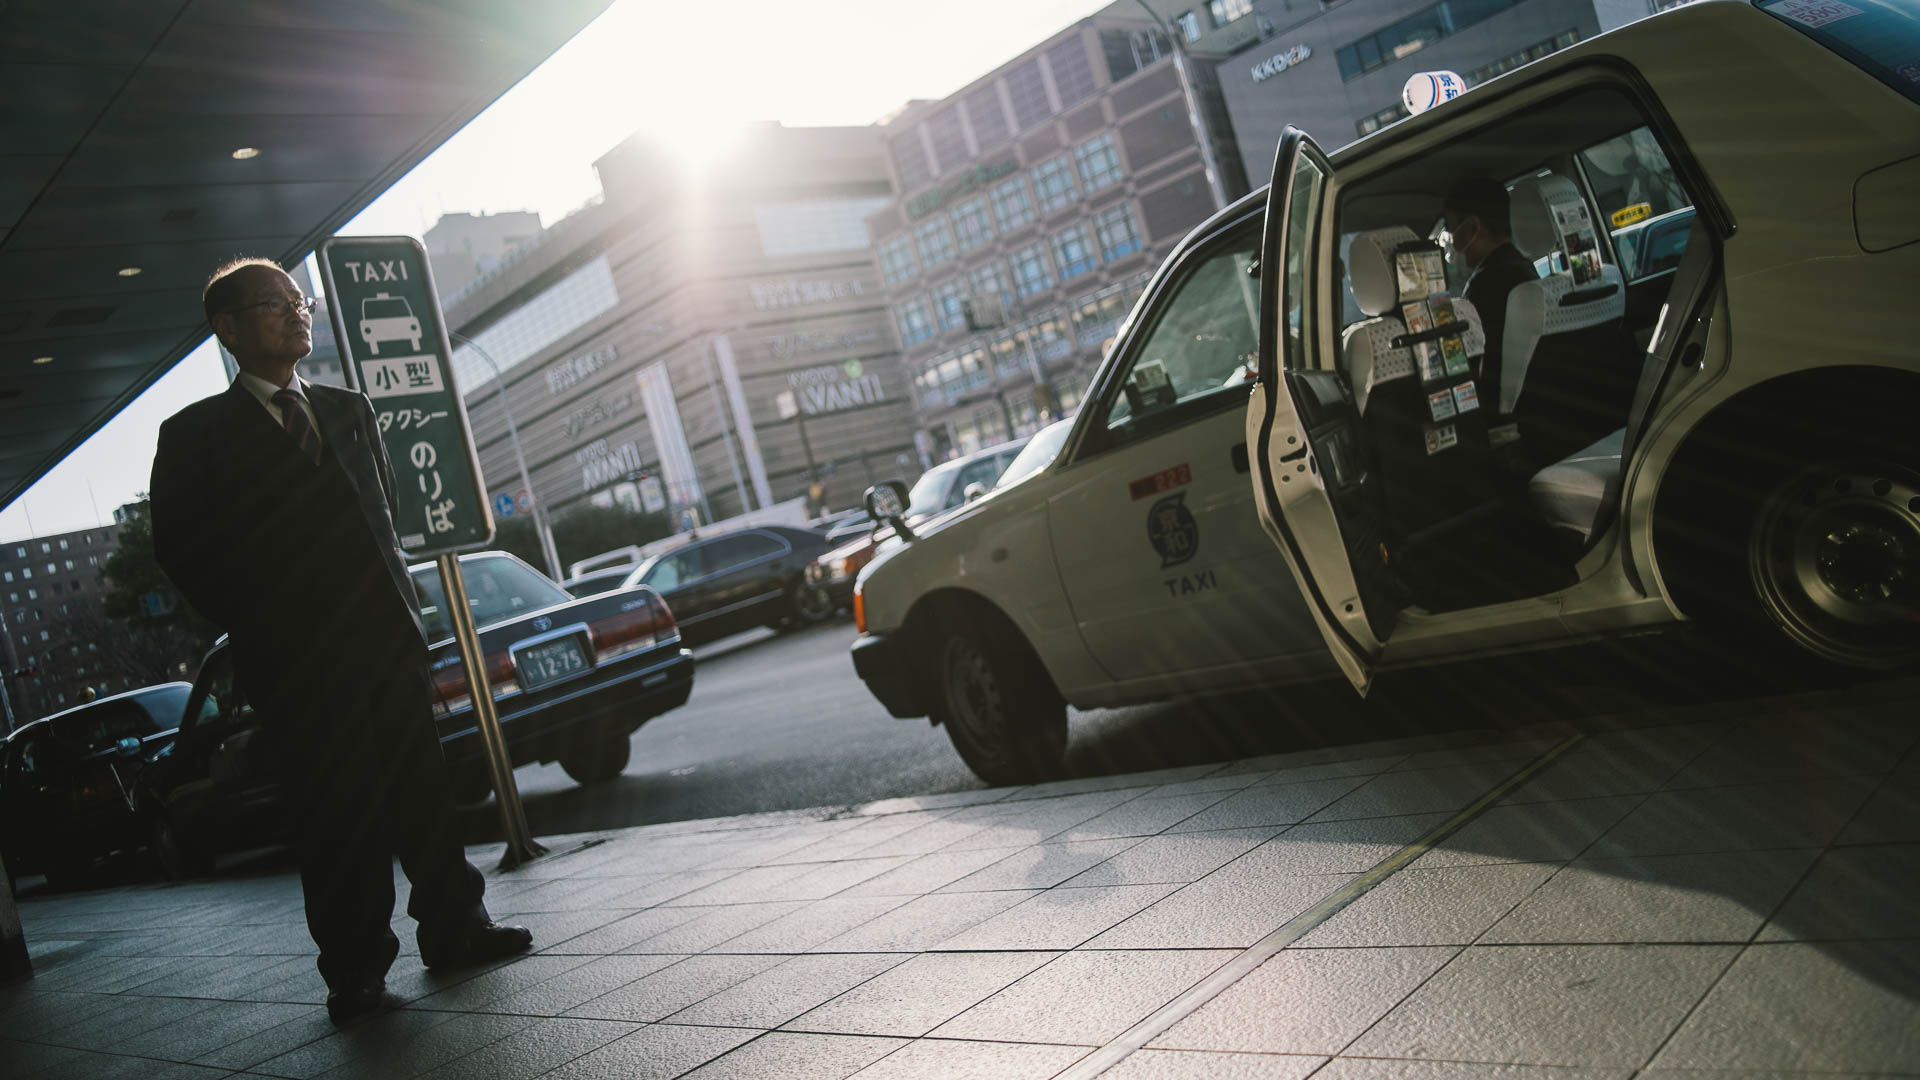 Taxi|Kyoto, Japan|Sony A7|Contax Carl Zeiss Planar Distagon Sonnar